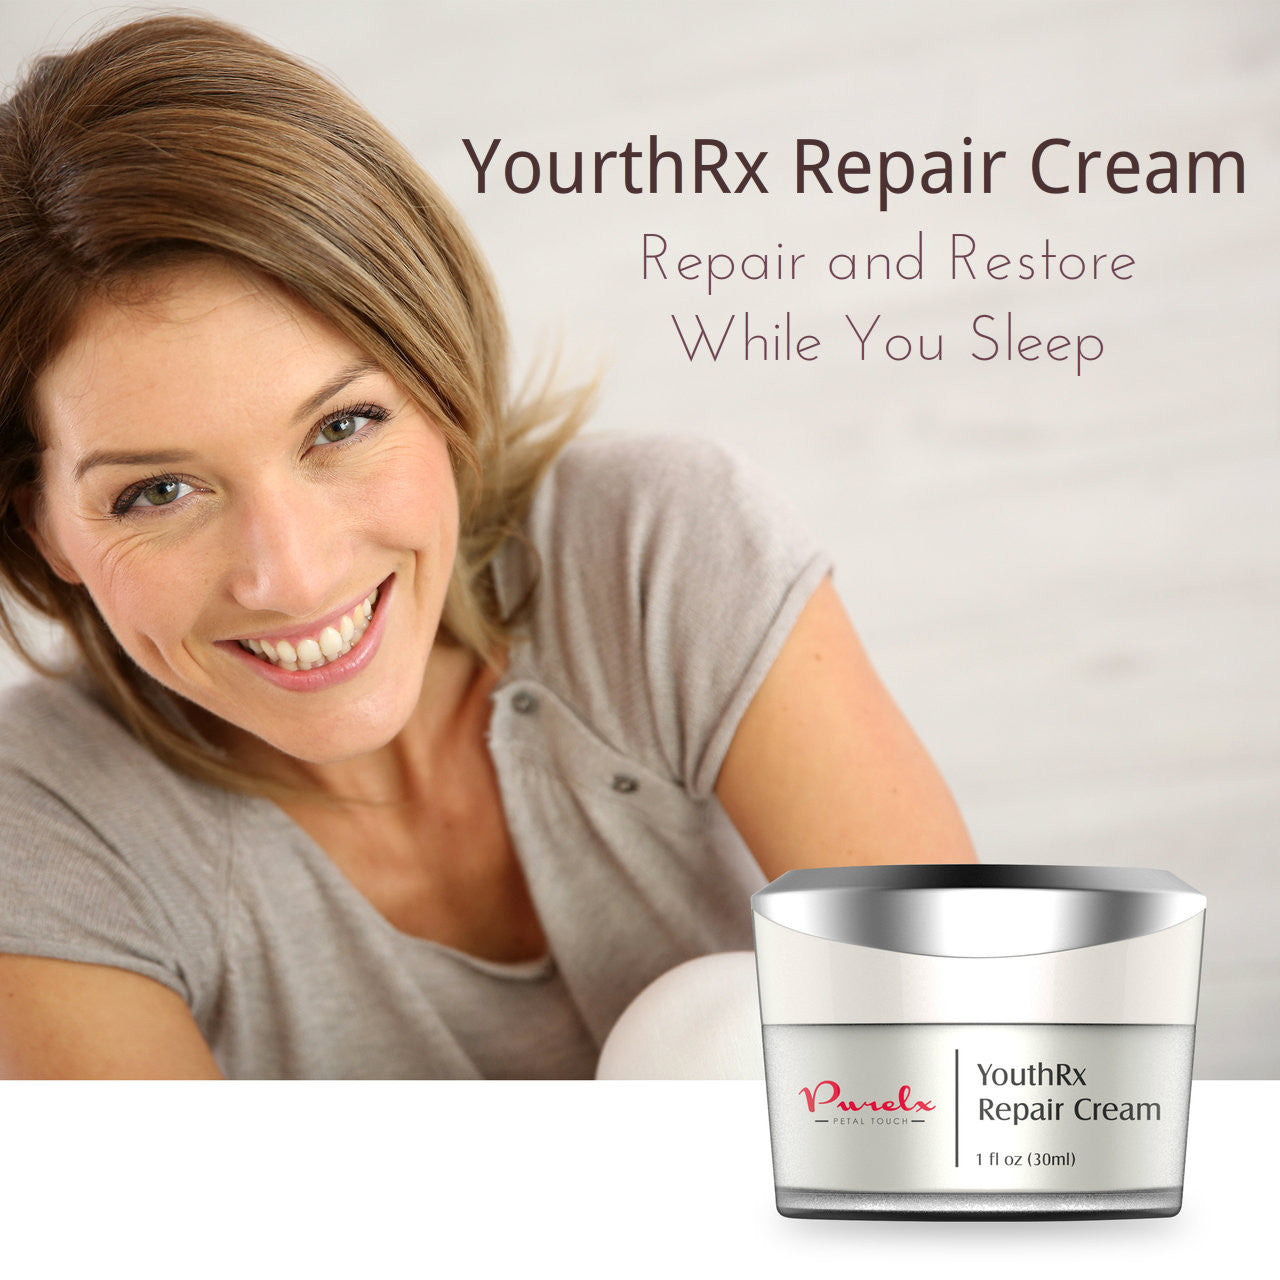 YouthRx Repair Cream